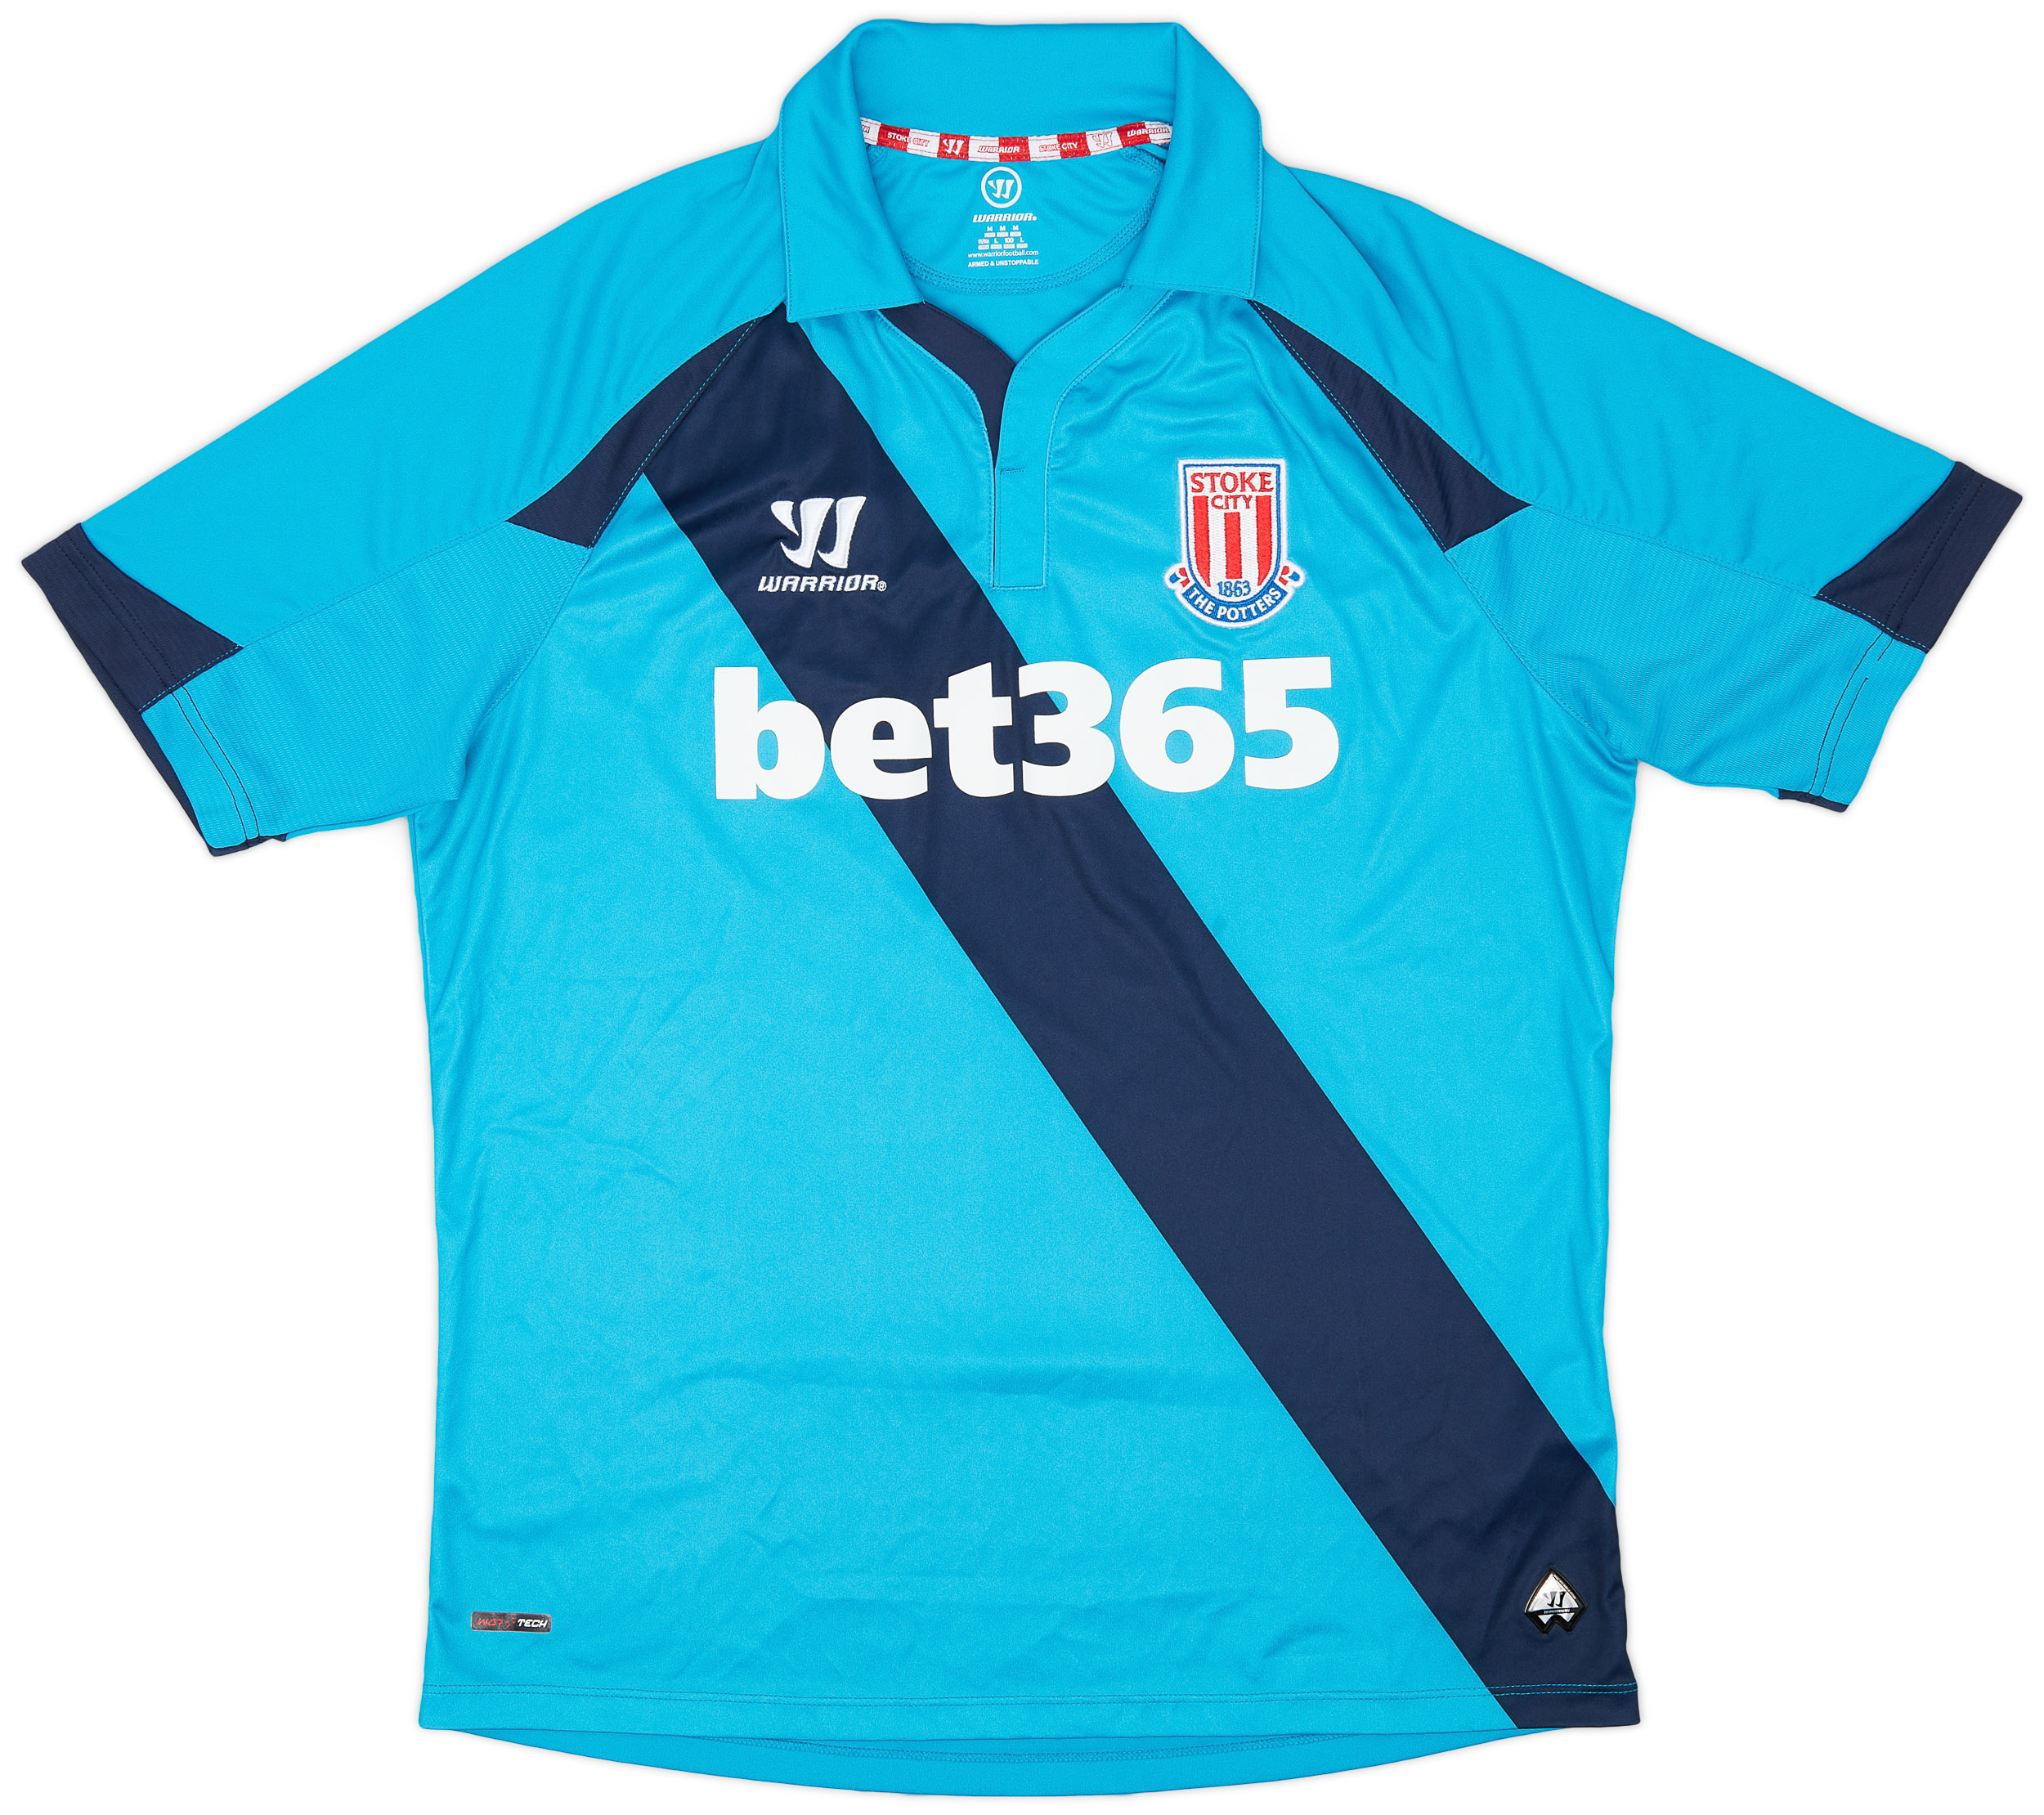 Retro Stoke City Shirt